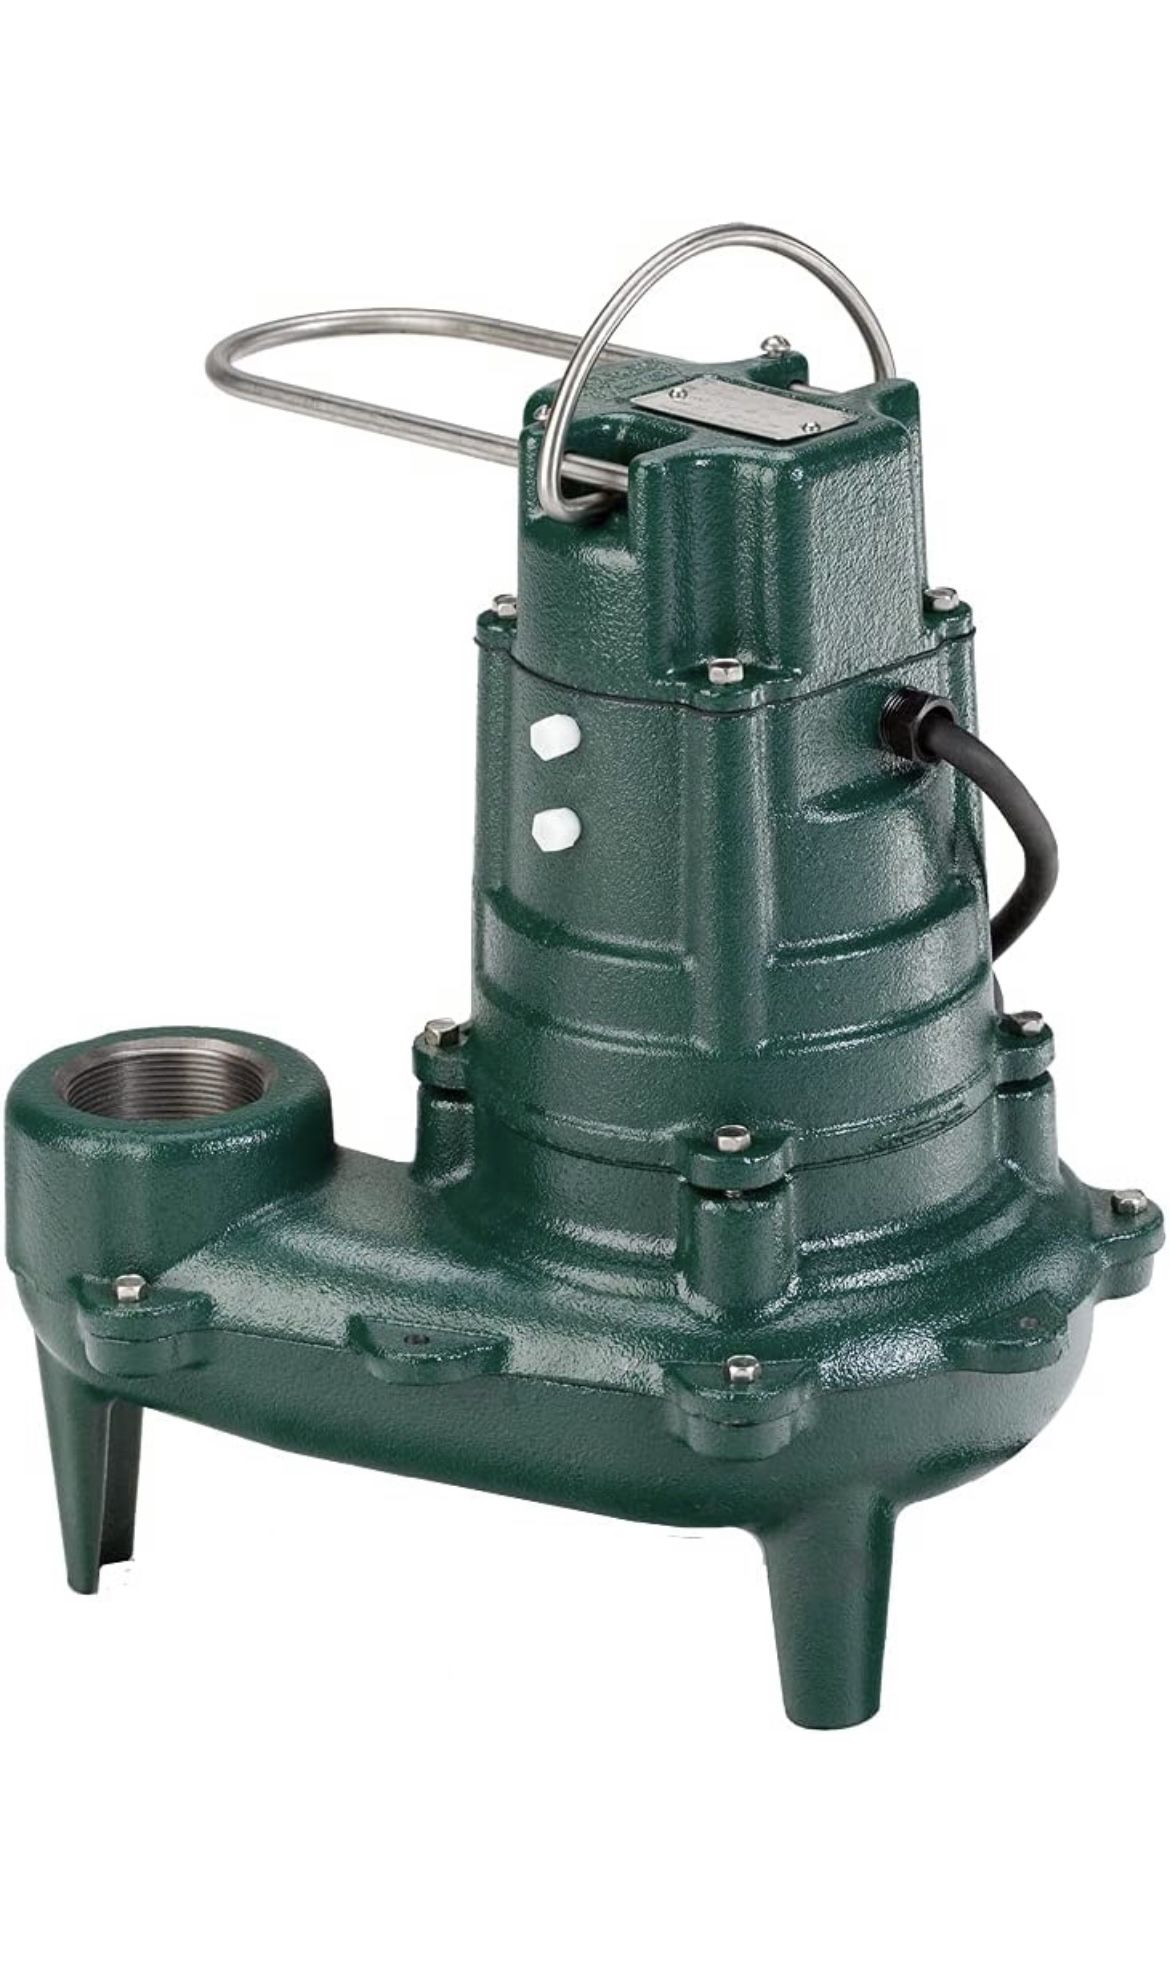 Zoeller submersible sewage pump